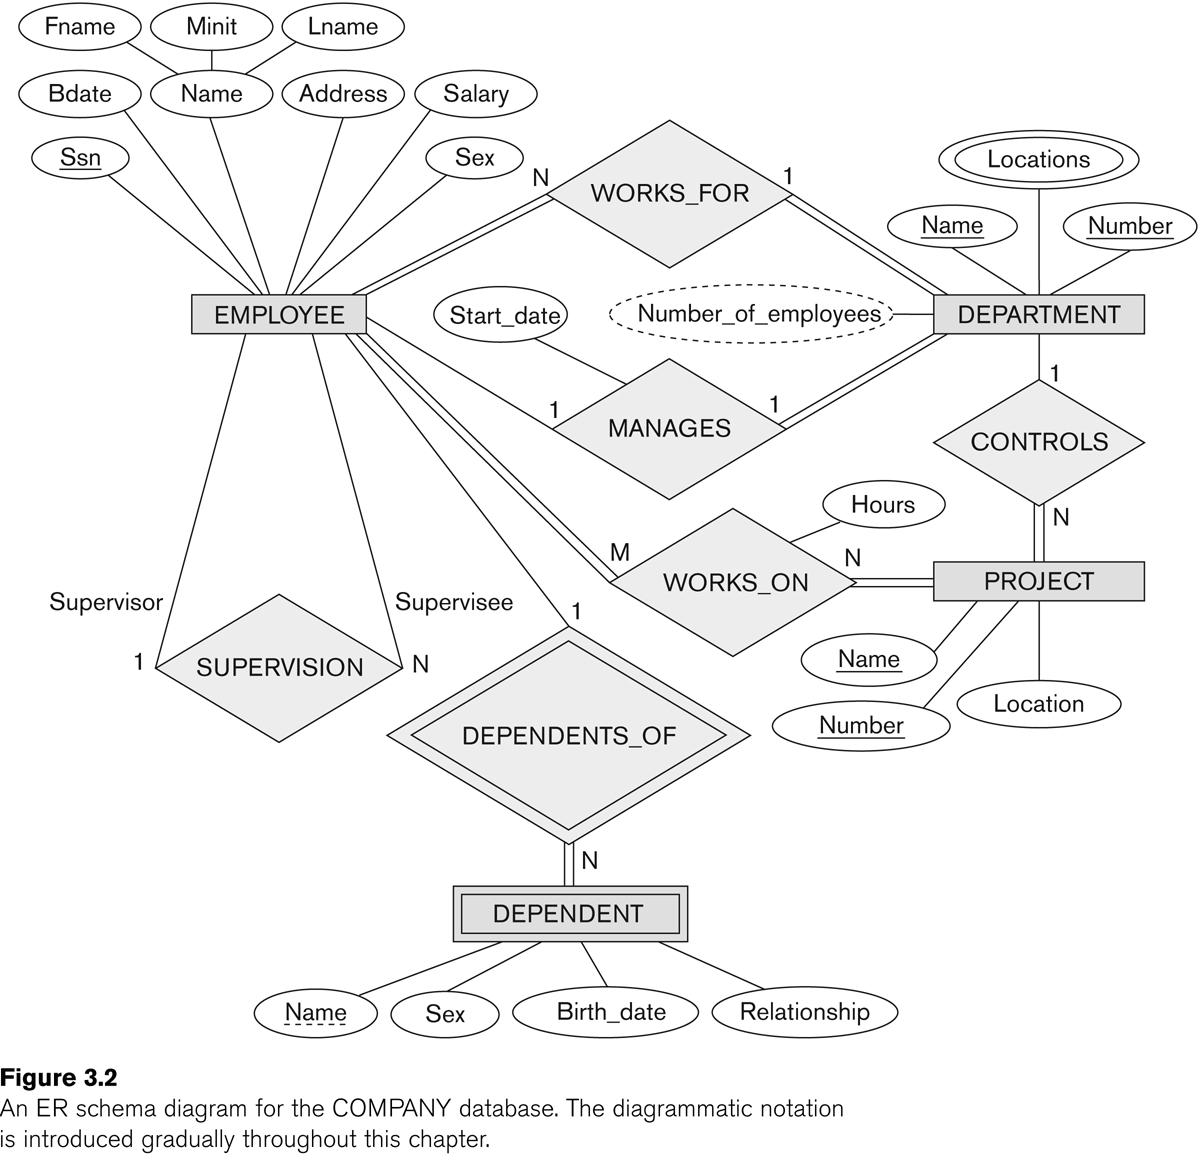 Entity-Relationship Modeling in Entity Relationship Diagram For Customer Relationship Management